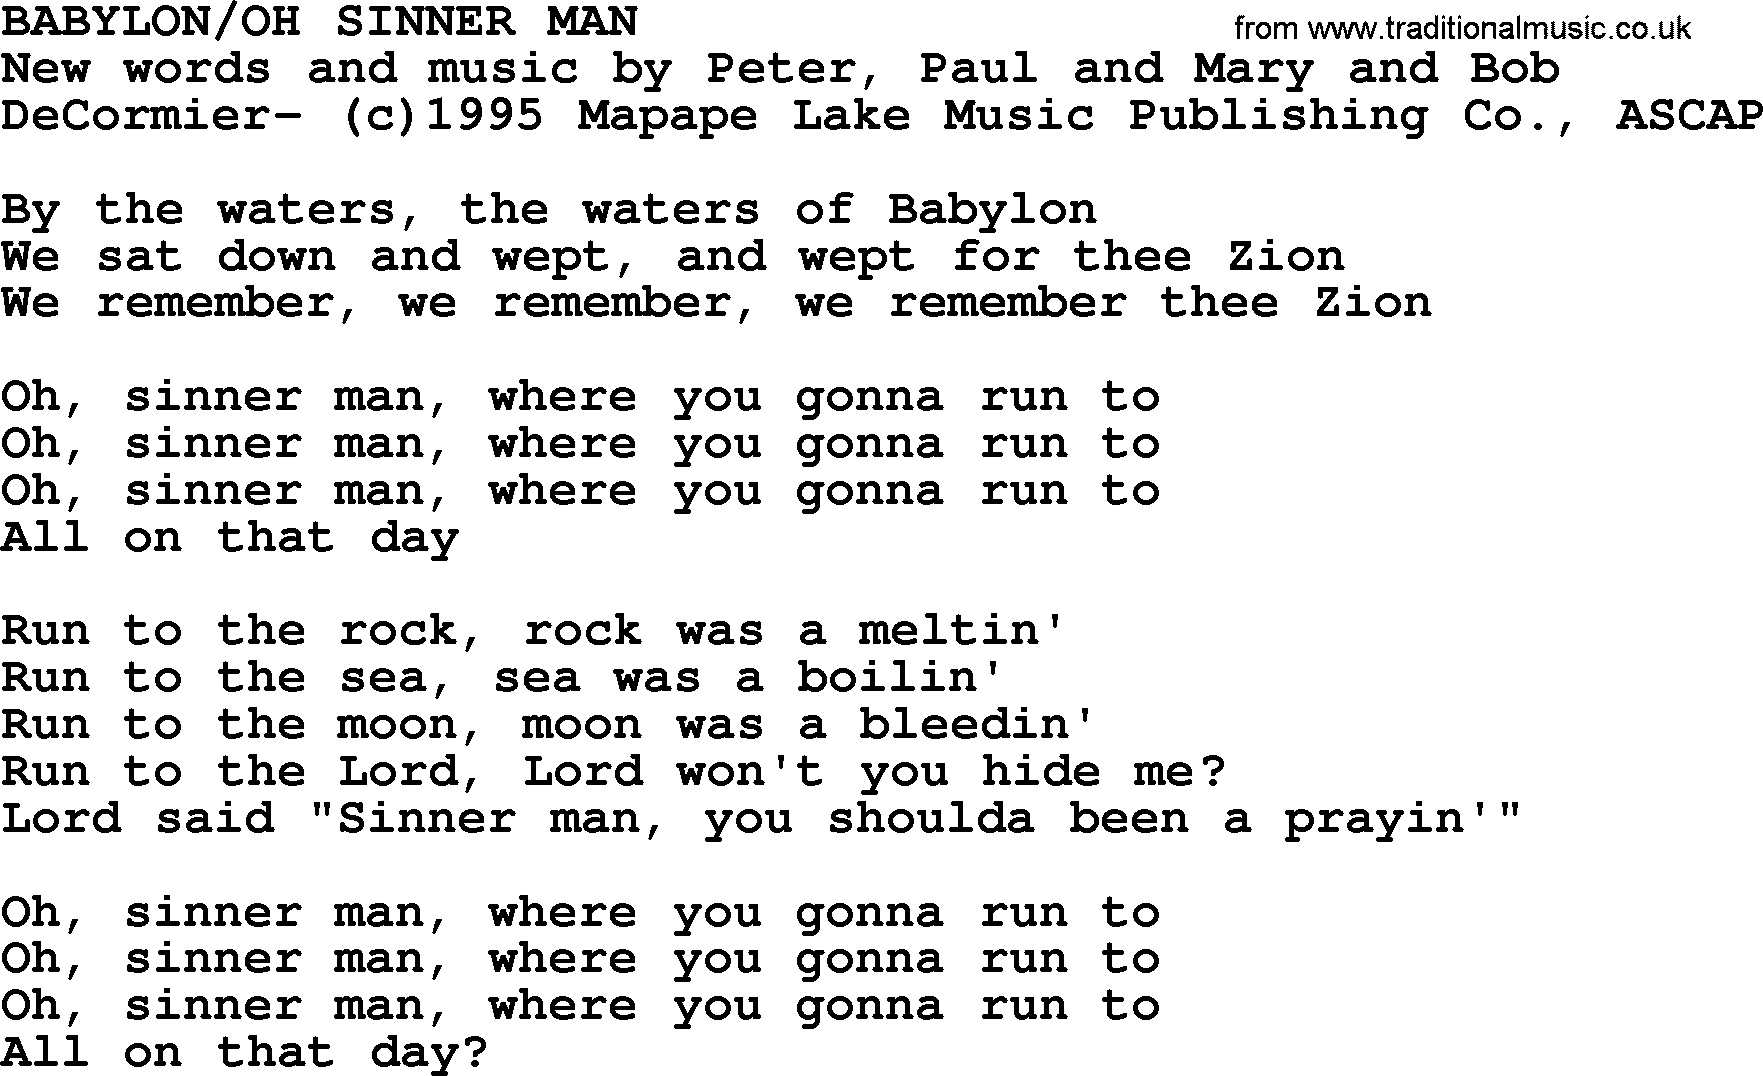 Peter, Paul and Mary song Babylonoh Sinner Man lyrics